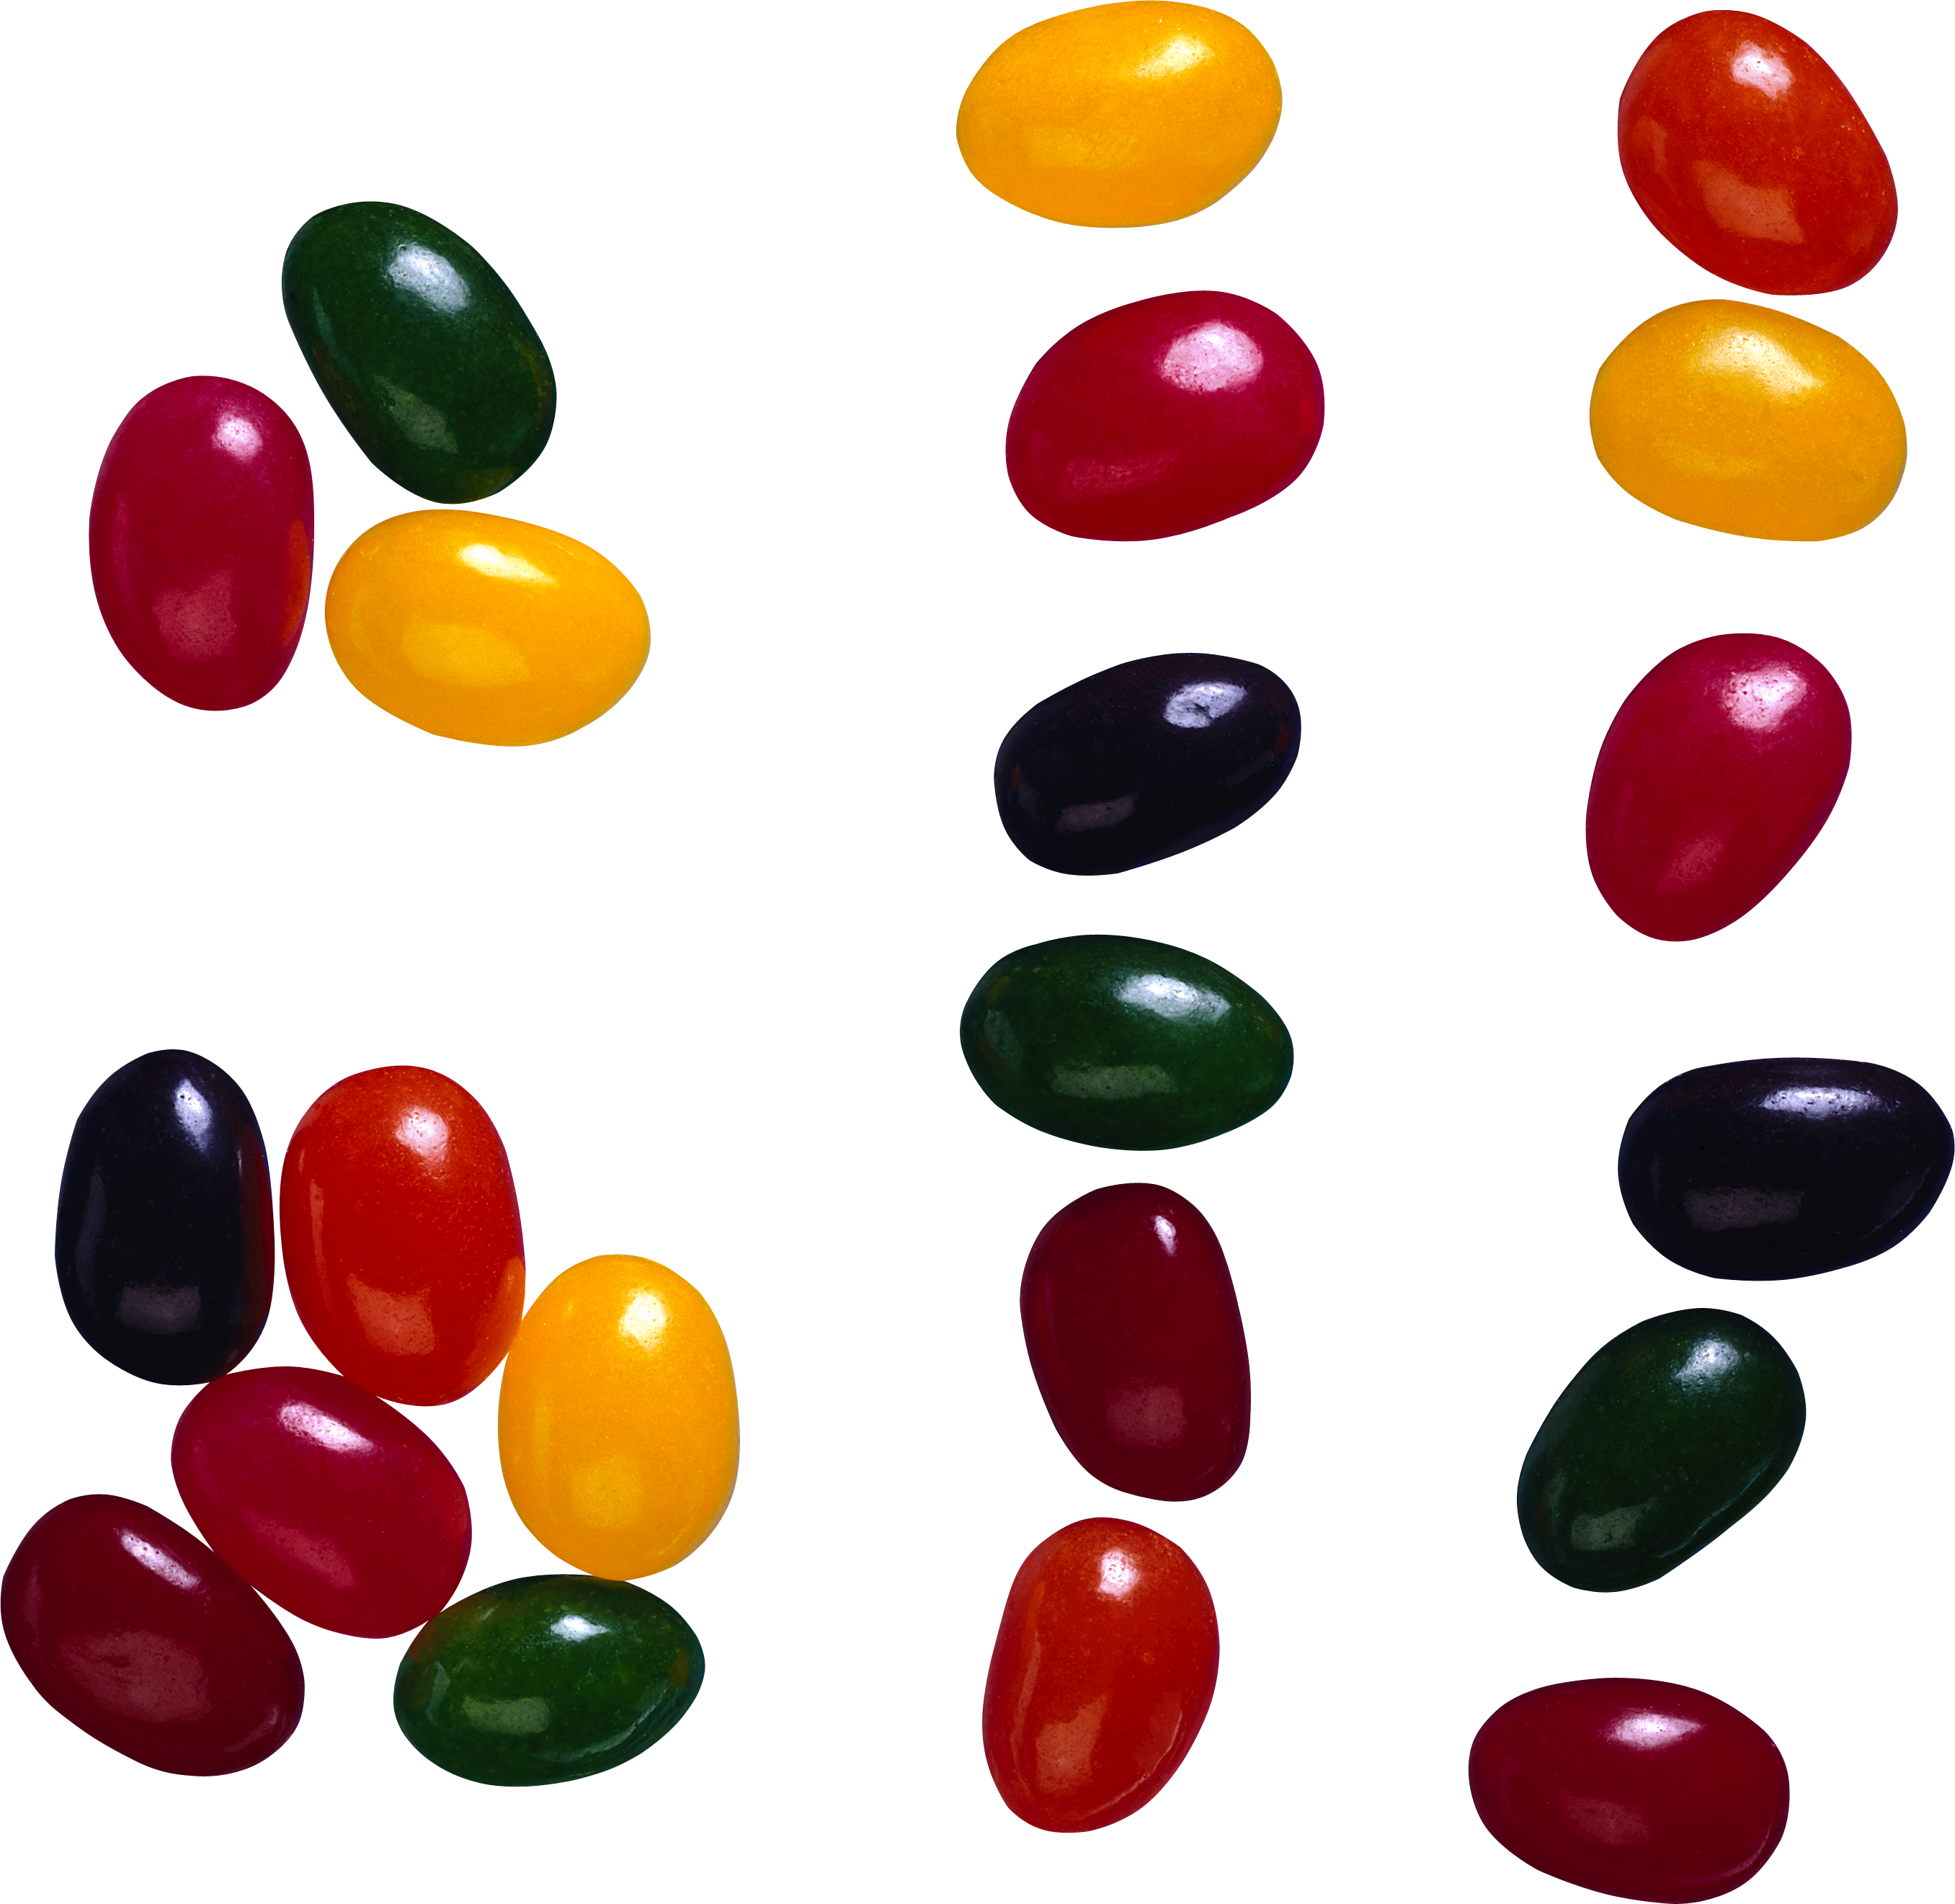 Jelly Bean Candy - Hard Candy (2713x2642)